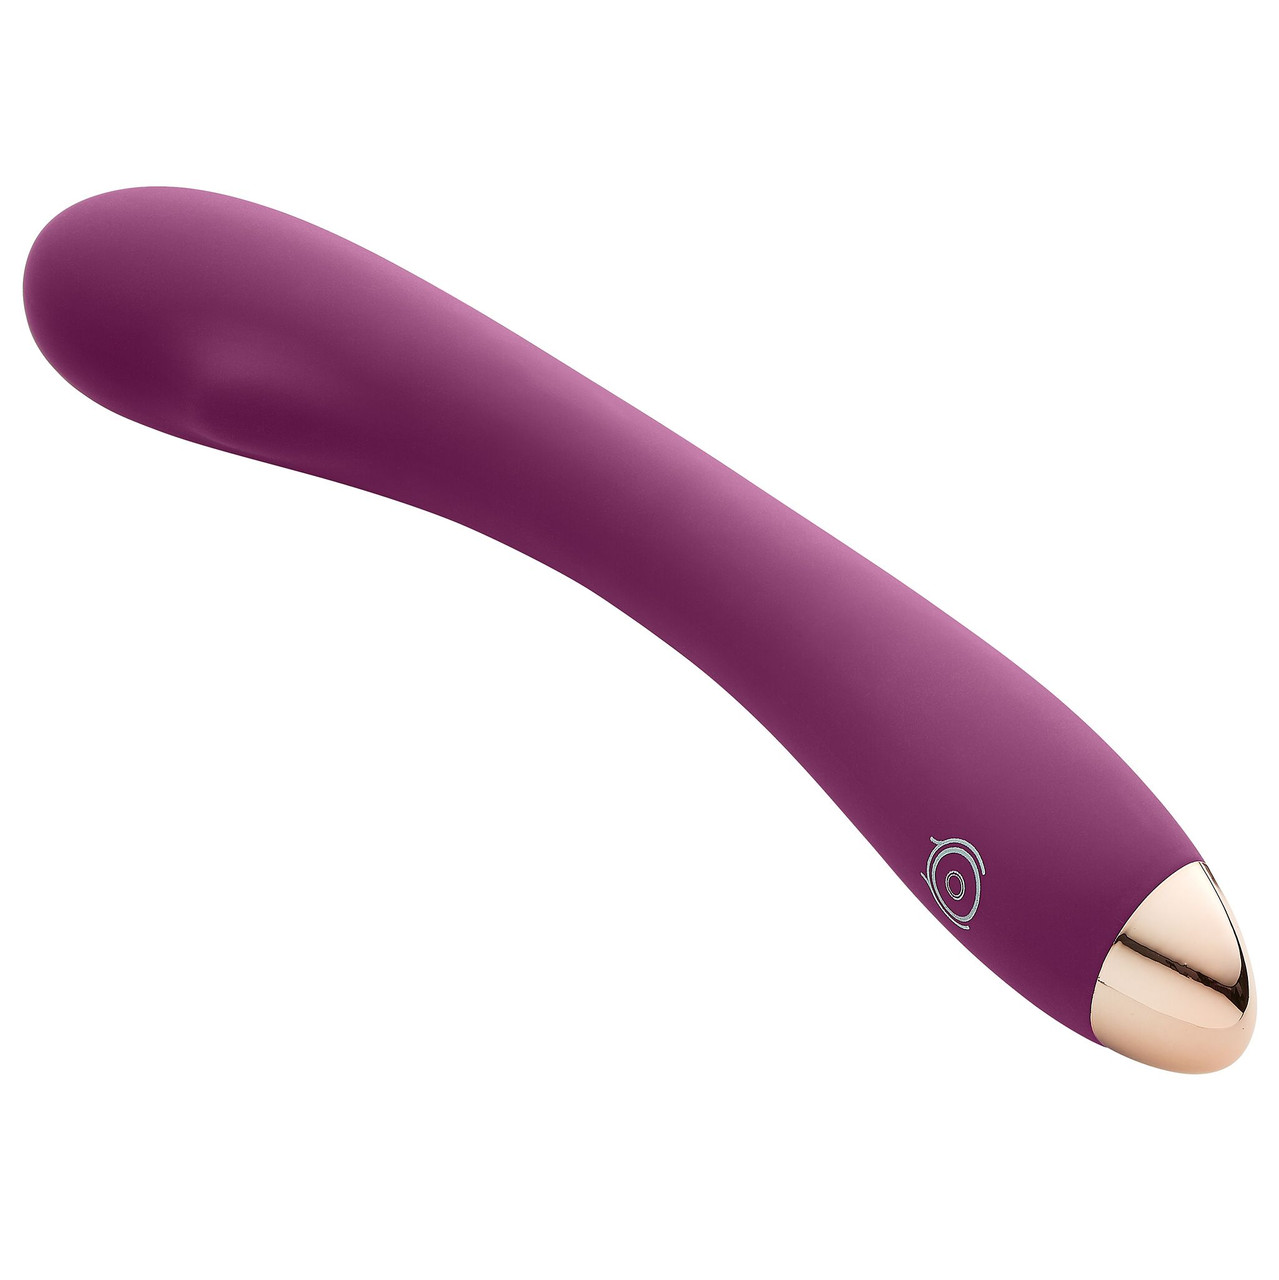 Rechargeable Slim G Spot Vibrator | G Spot vibratos for women online from Condom Depot